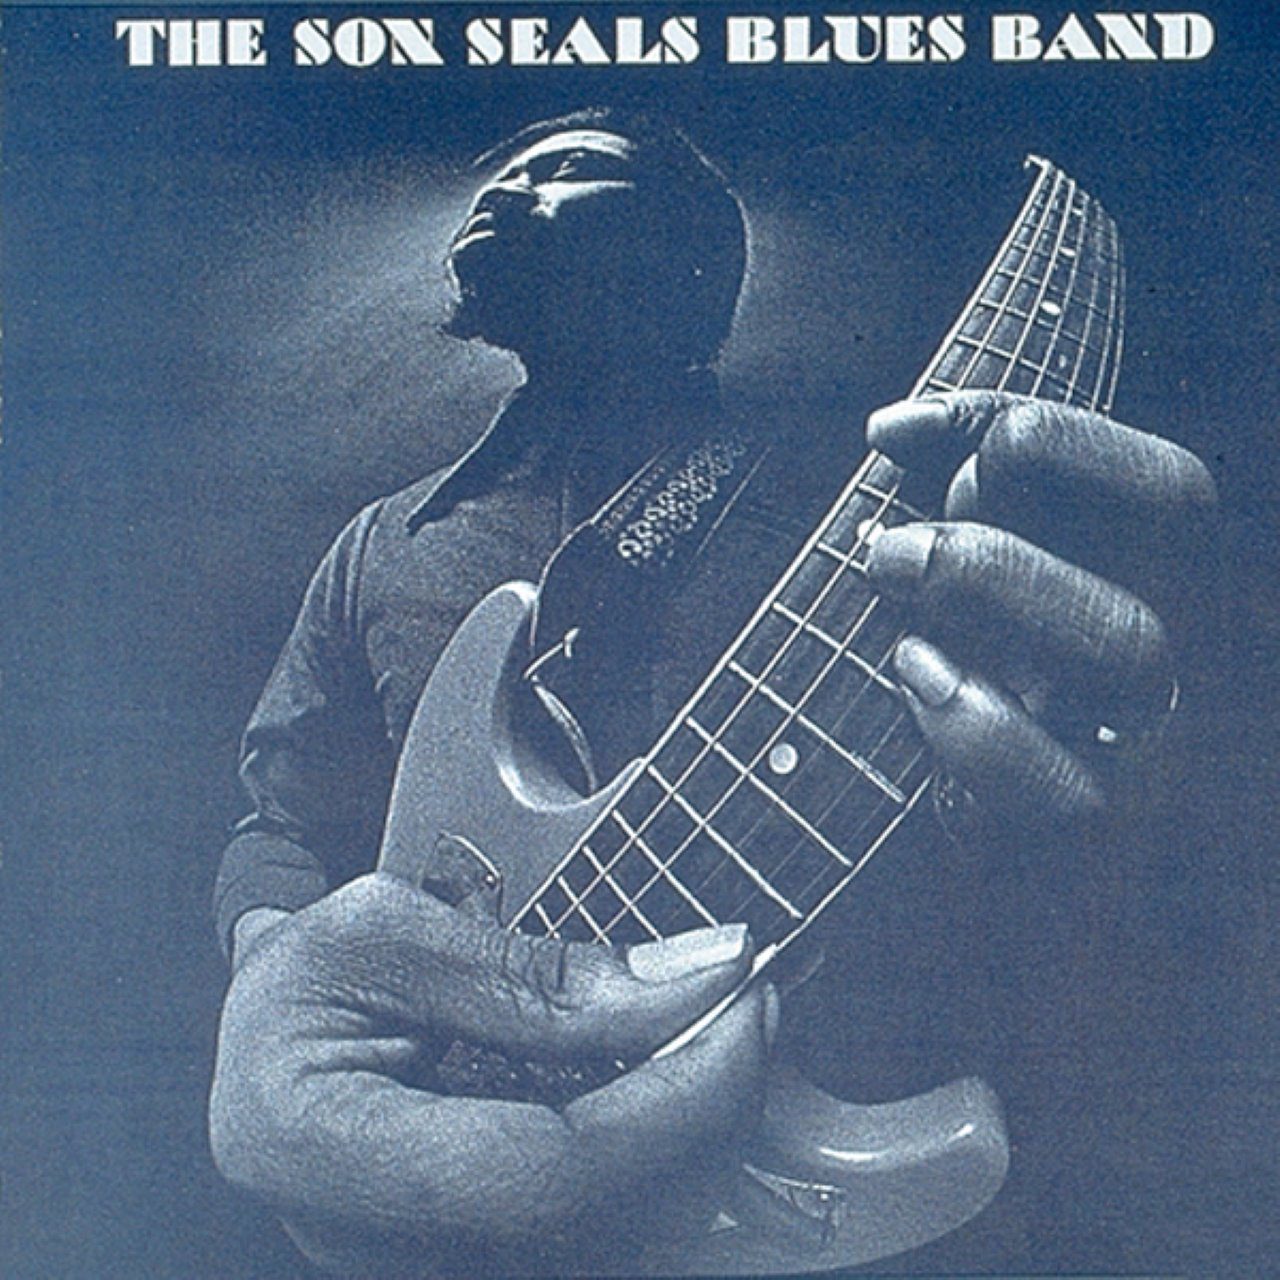 Son Seals Blues Band – The Son Seals Blues Band cover album